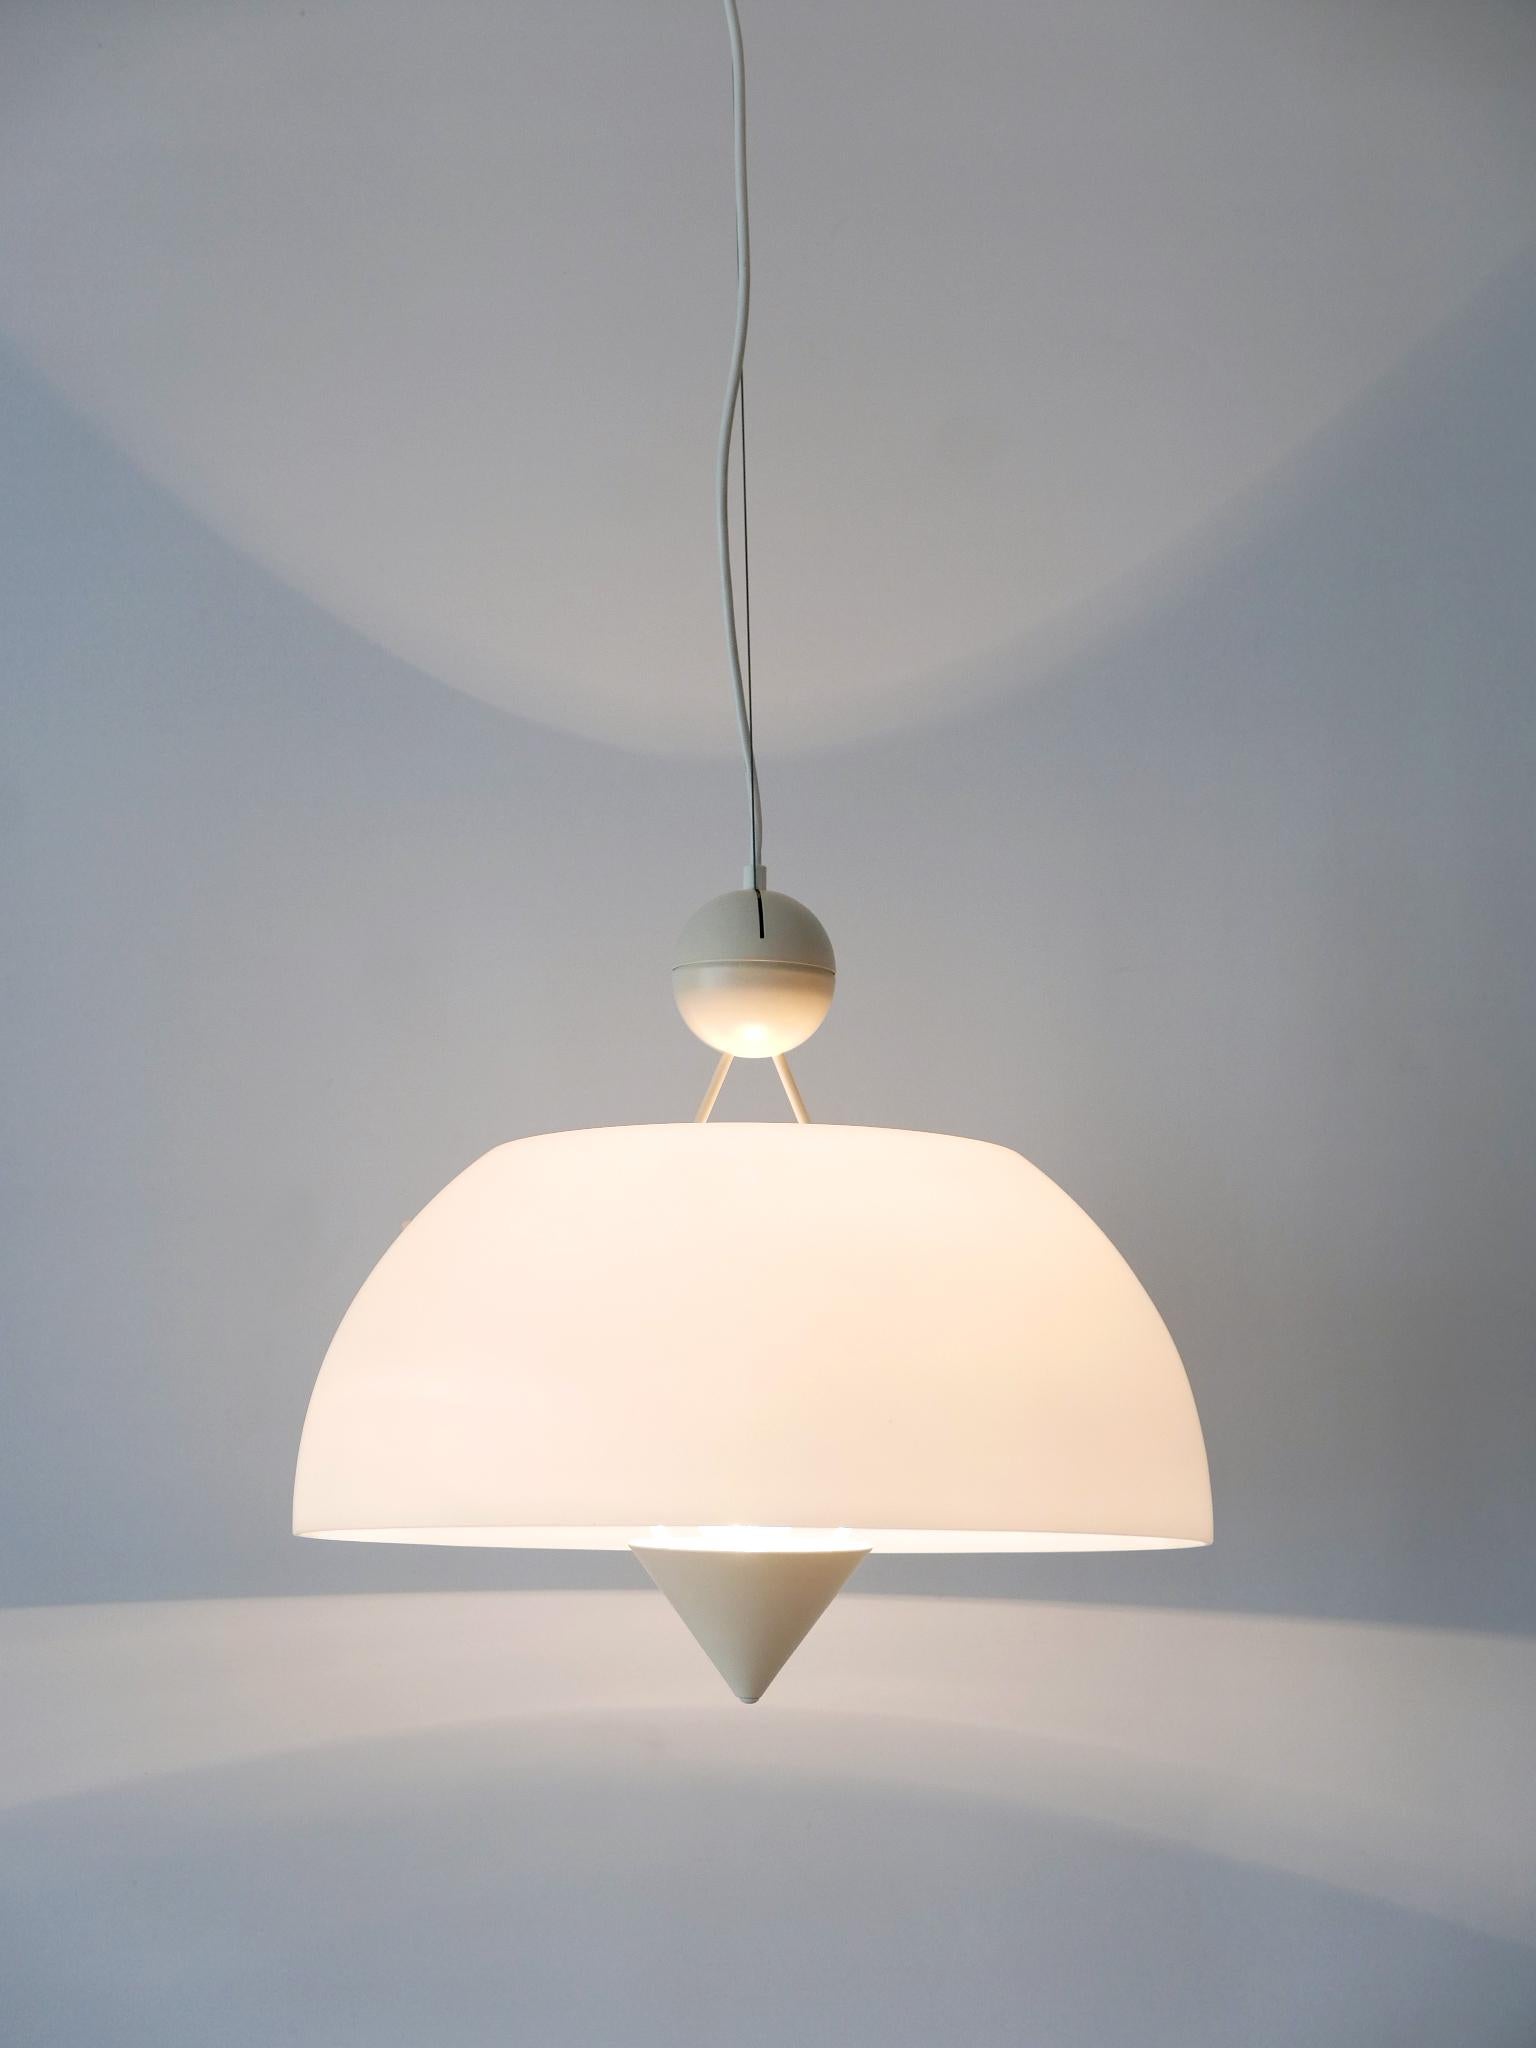 Rare & Elegant Mid-Century Modern Pendant Lamp or Hanging Light Italy 1970s For Sale 3